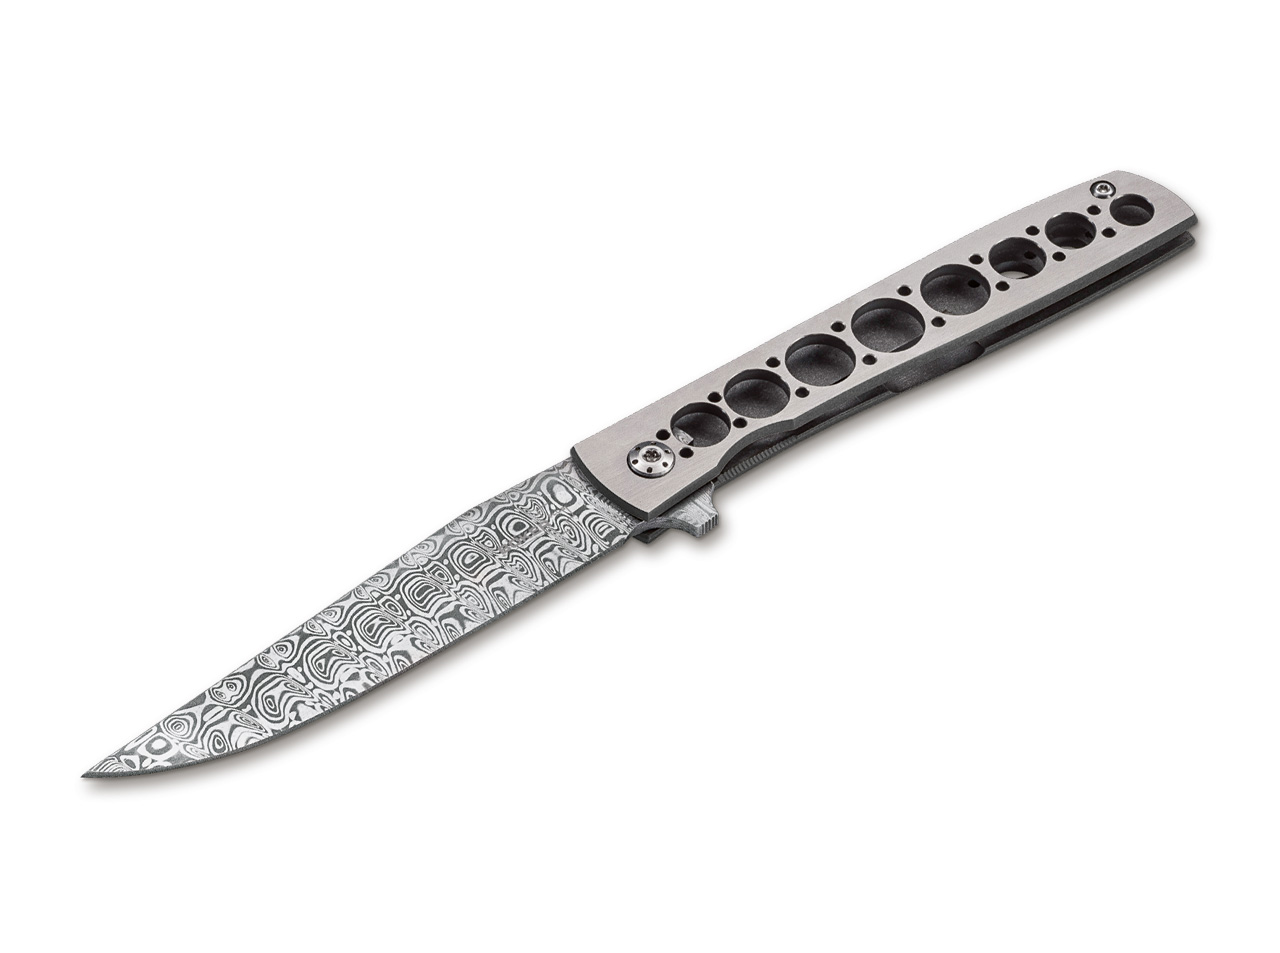 Boker Plus Exskelibur II Damascus Steel Pocket Knife with Cocobolo